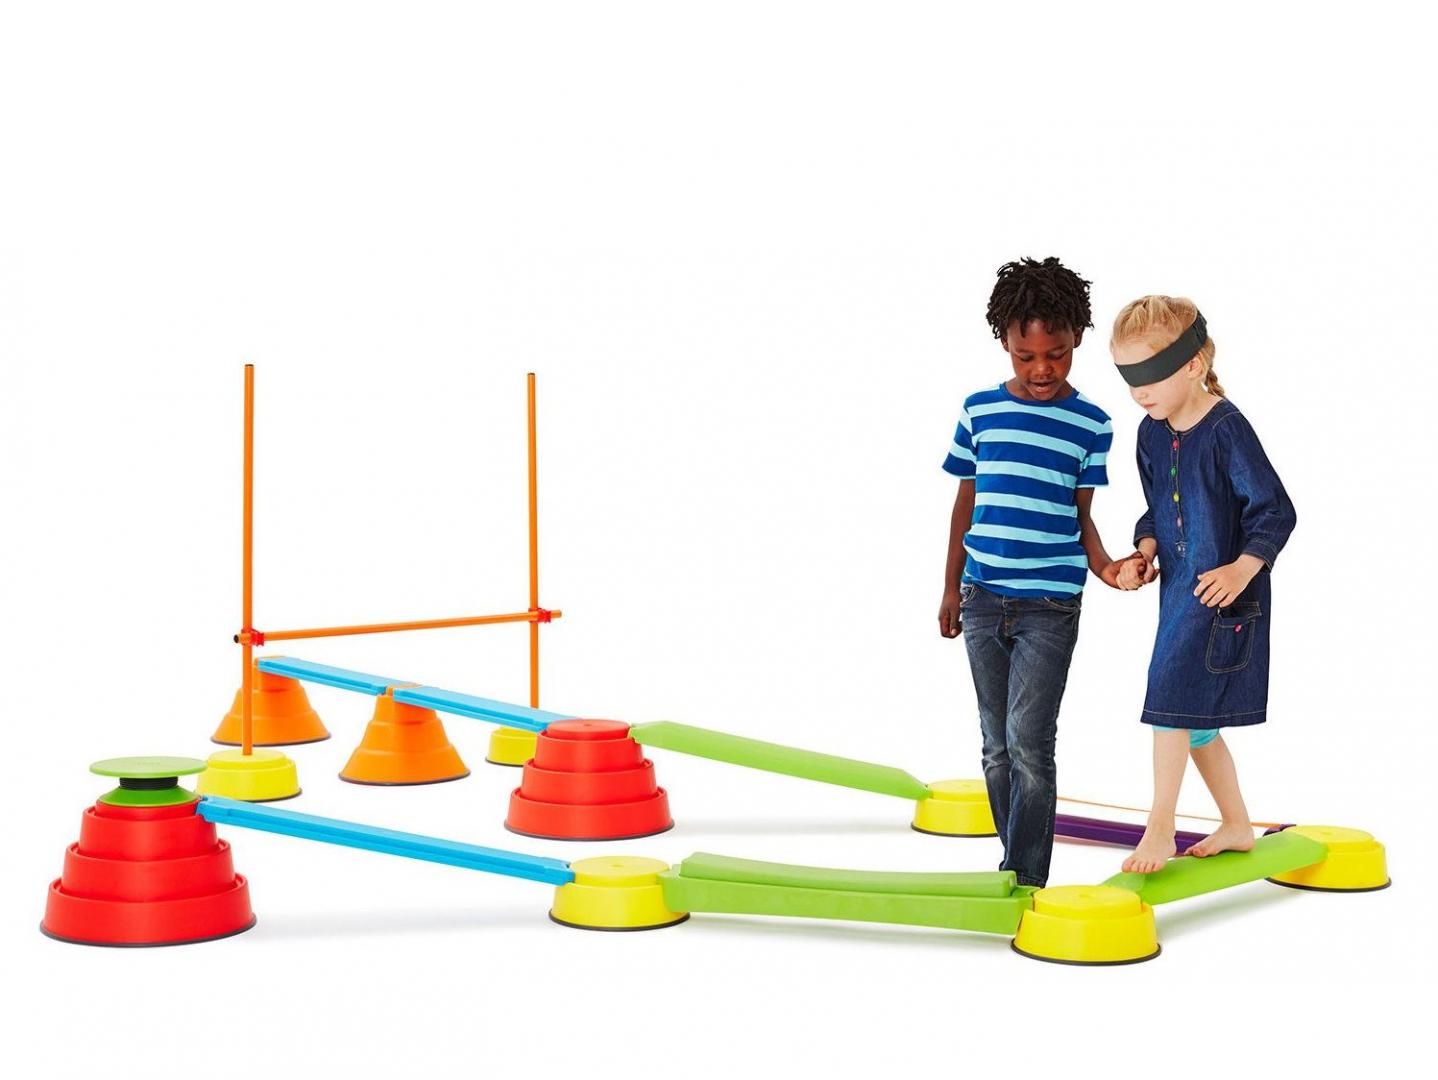 Build N' Balance Large - große Balancierstrecke - fördert den Gleichgewichtssinn der Kinder